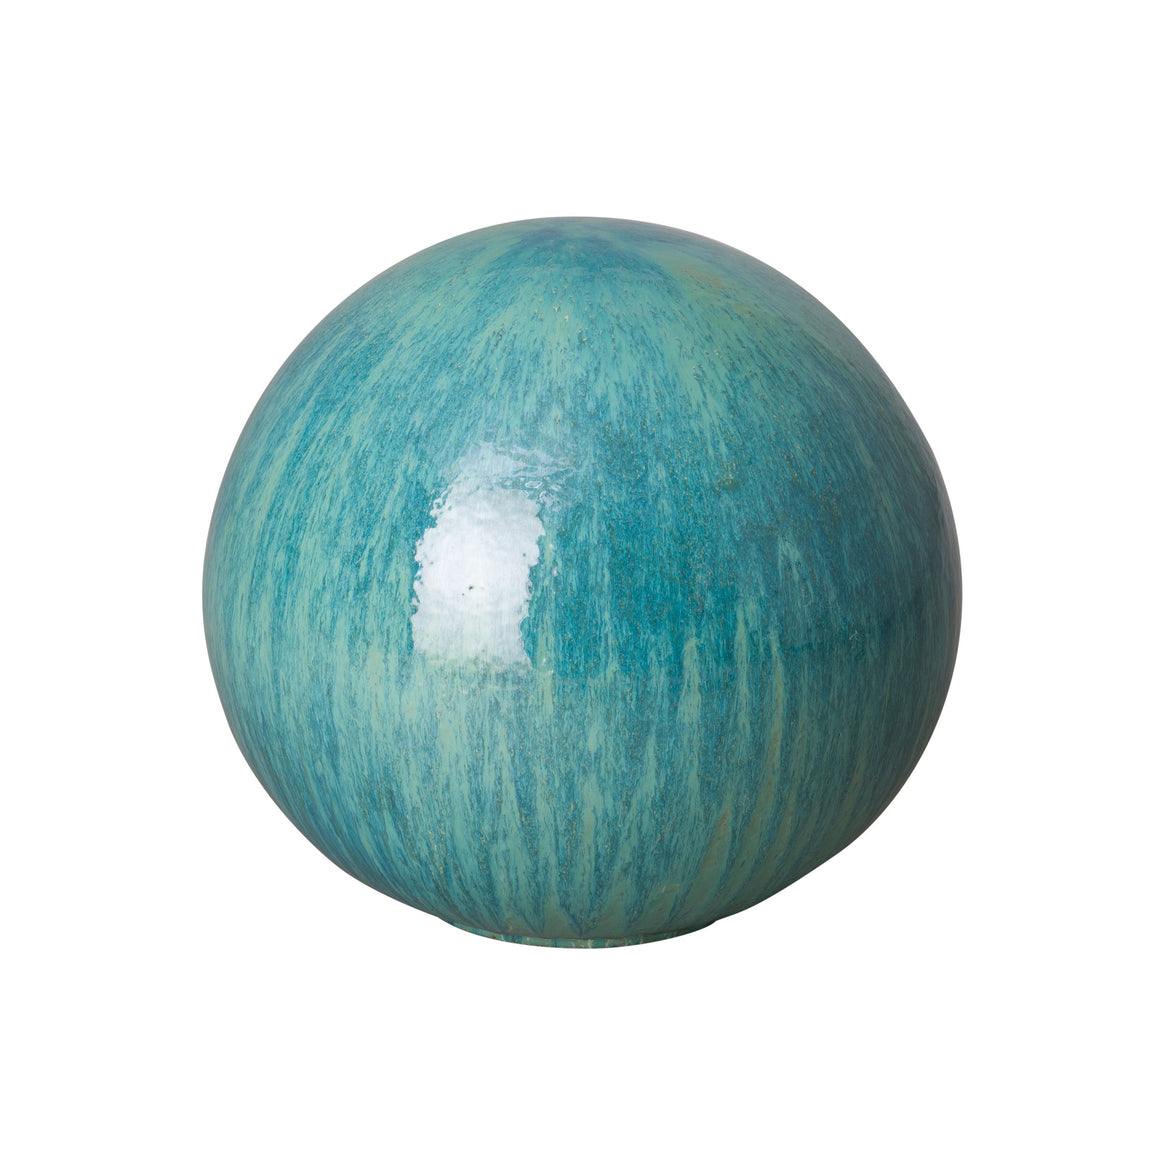 Landscape Gazing Ball - 24 inch Aruba Blue Glaze